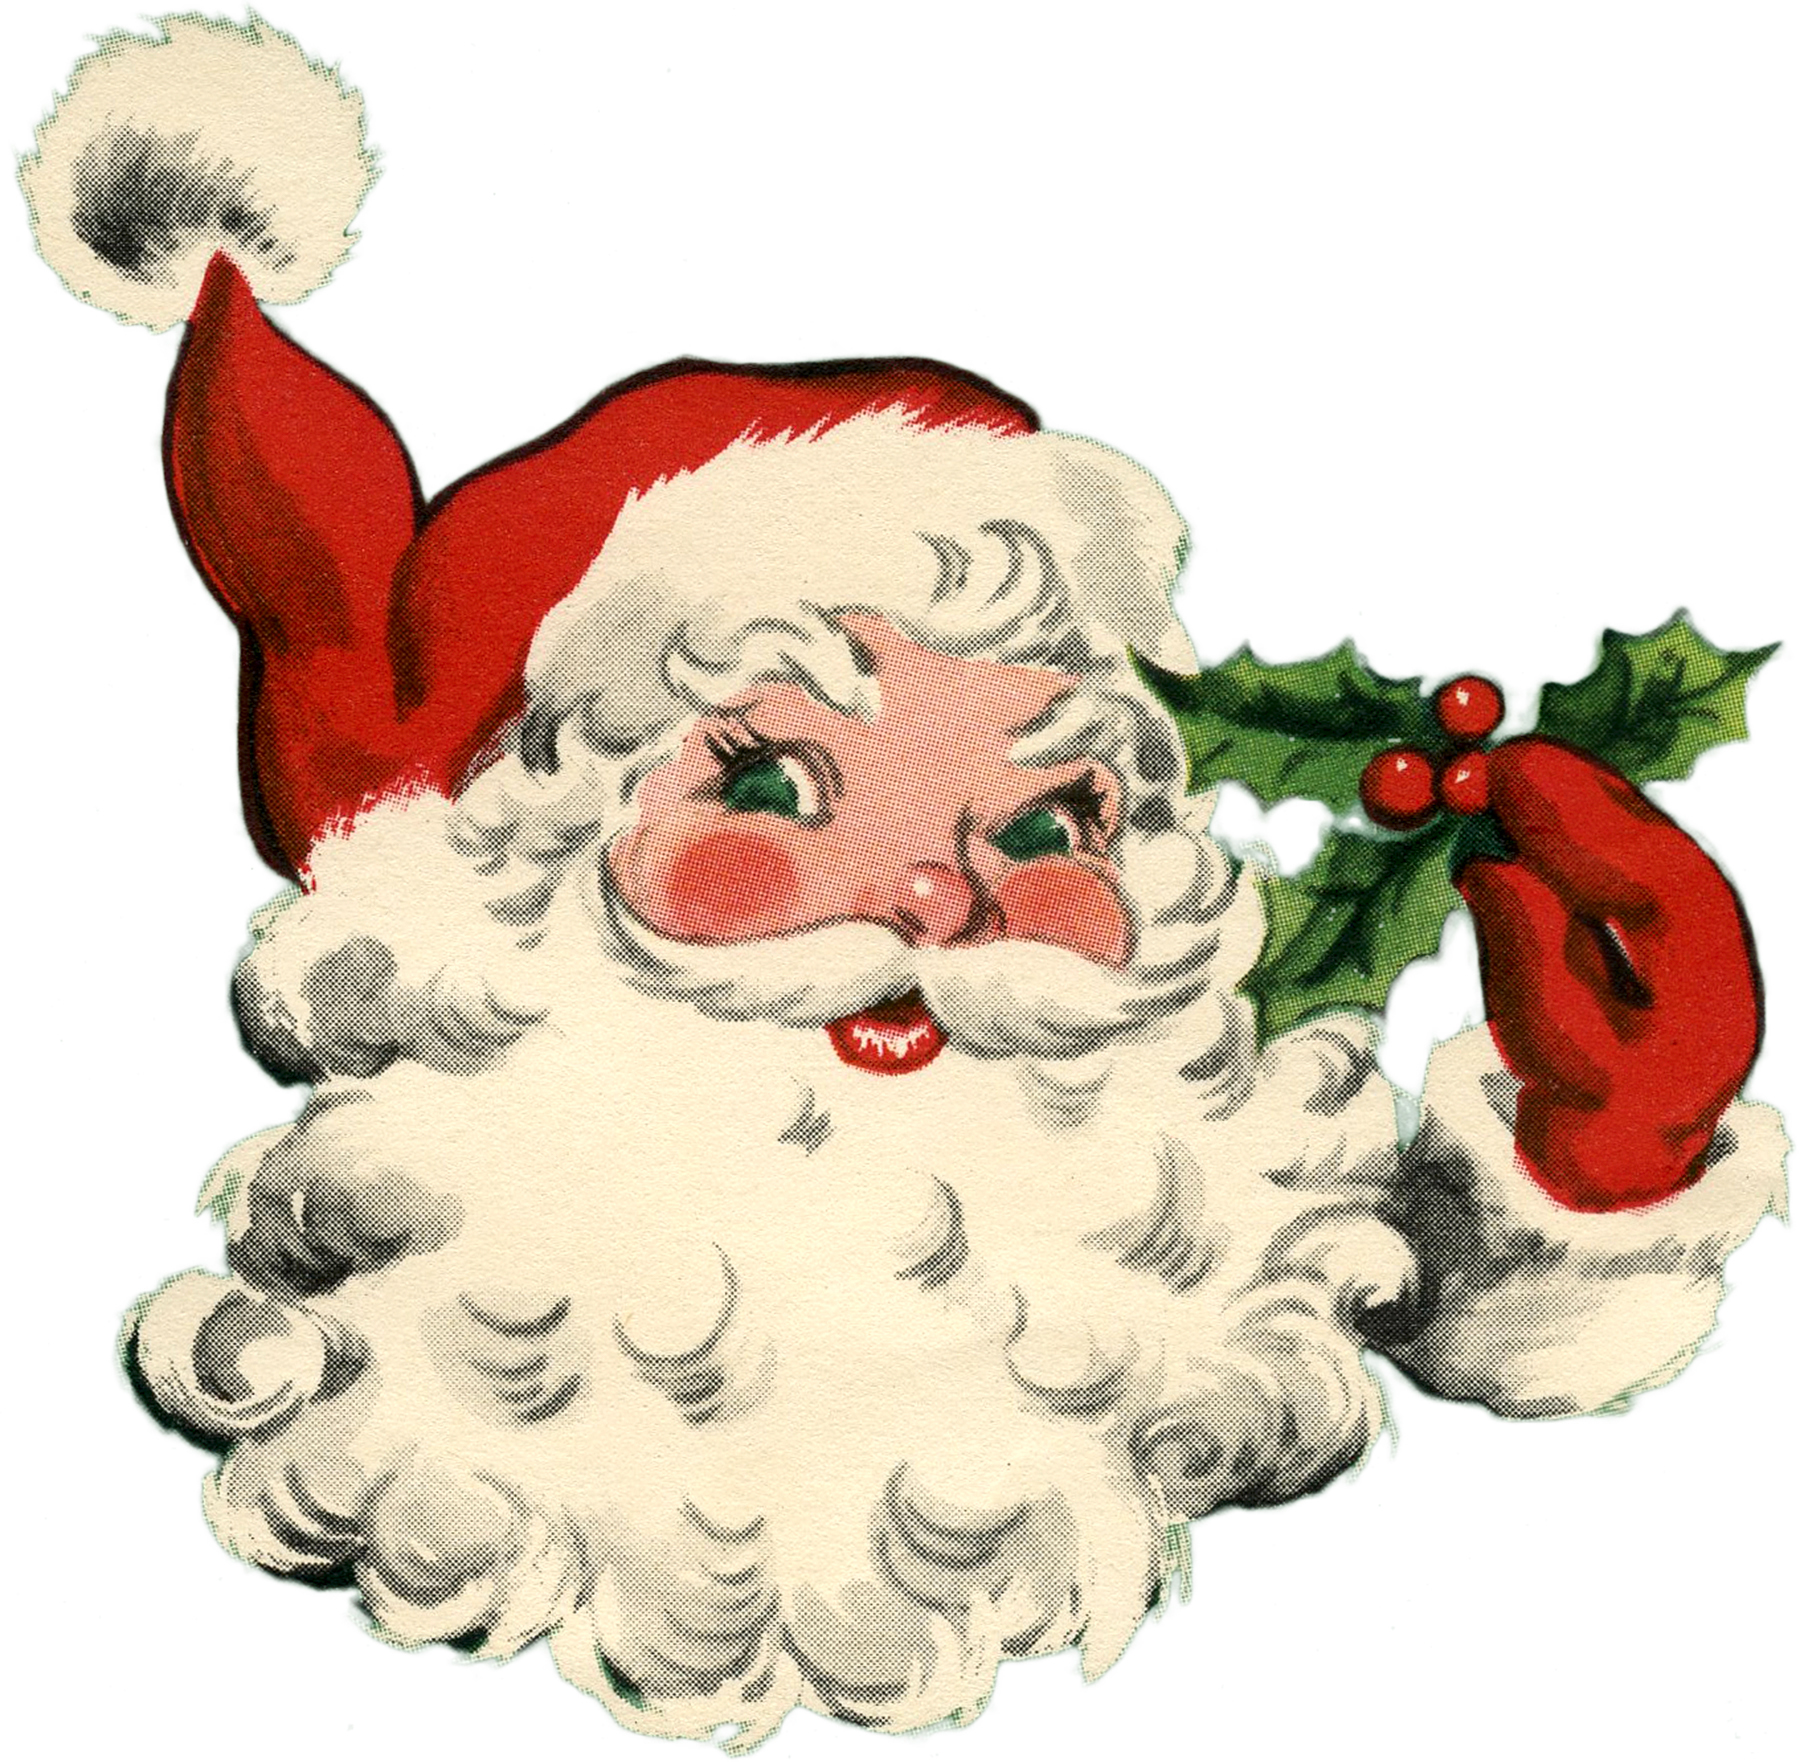 Adorable Santa Image! - The Graphics Fairy